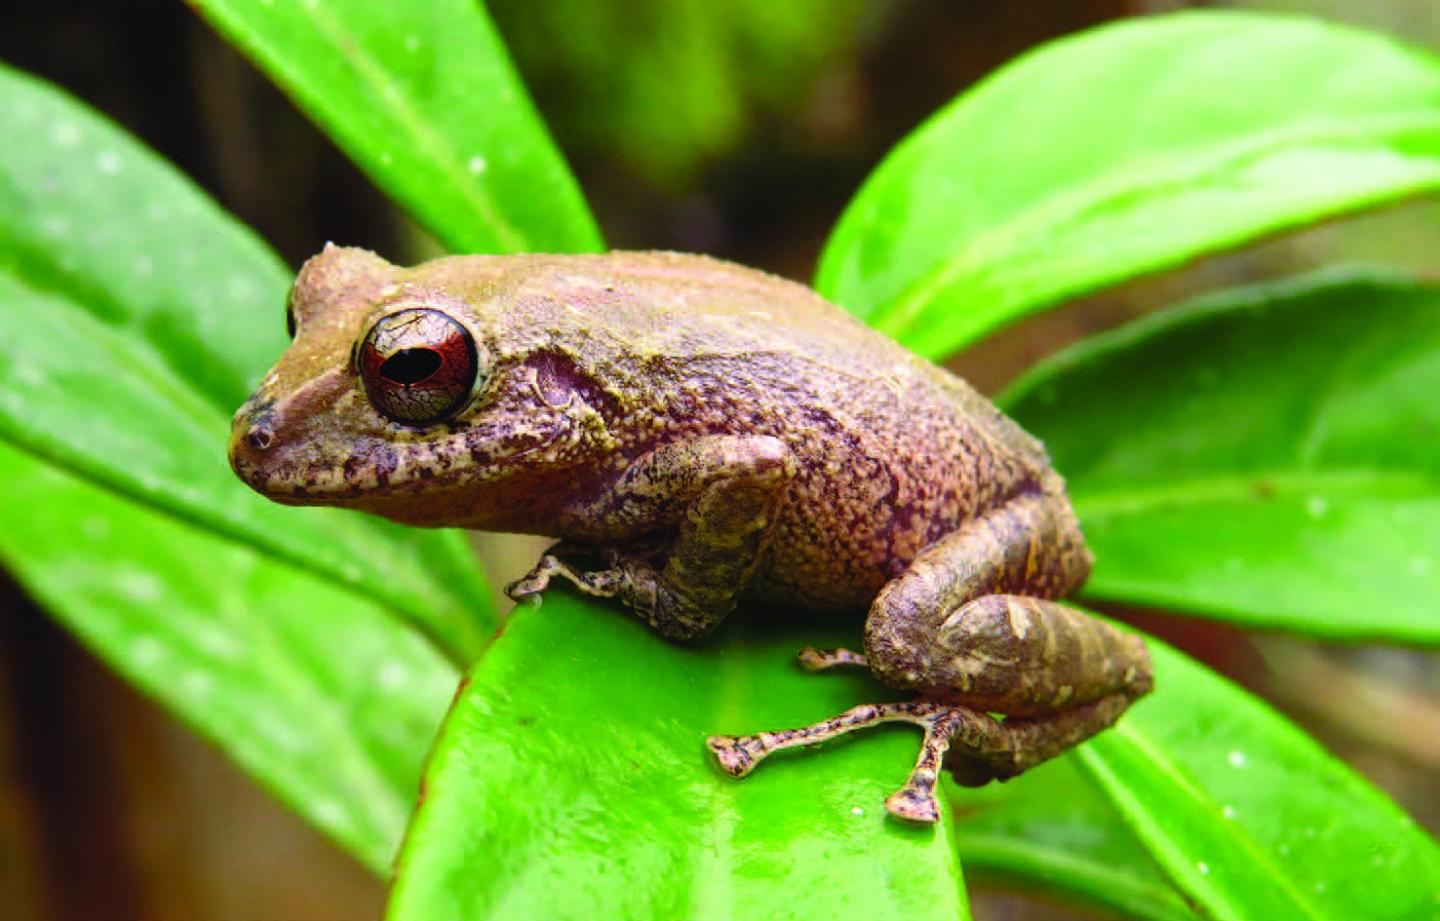 Caption: Adult female Prometeo Rain Frog in its natural habitat. Credit: Dan Cog?lniceanu [sic]